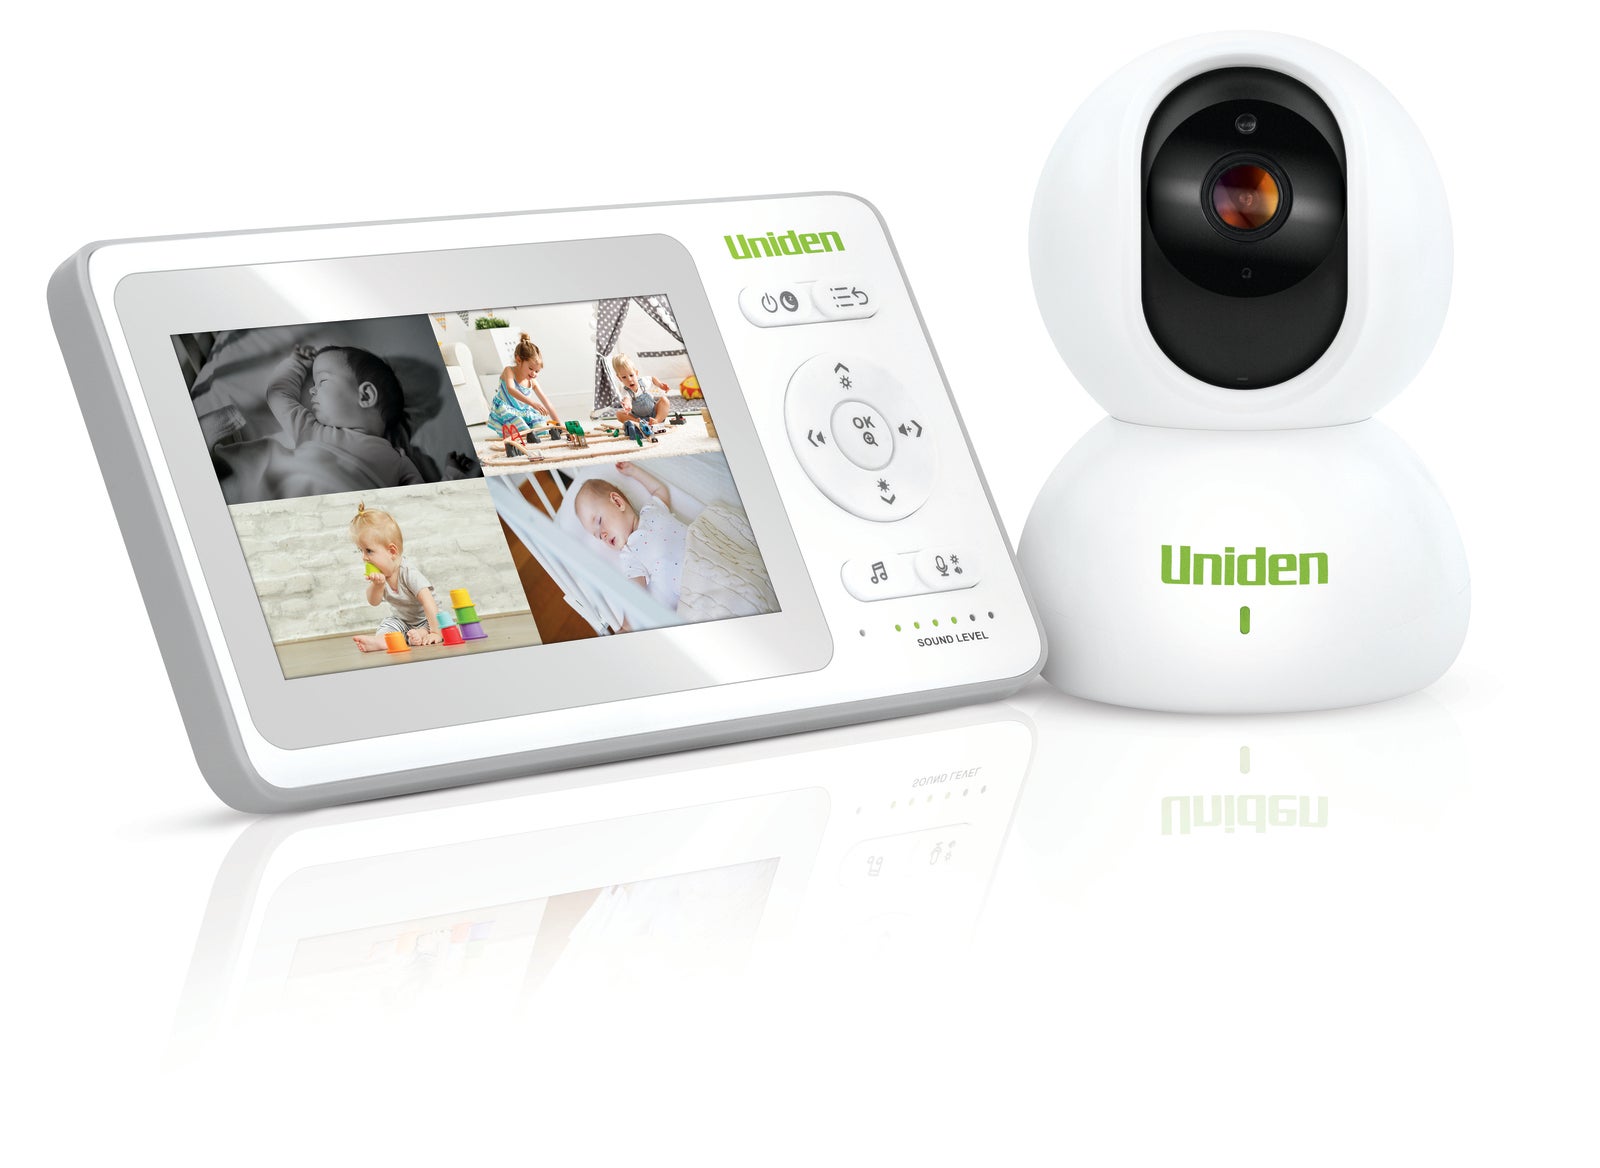 Uniden Digital Wireless Baby Monitor4.3 with Pan & Tilt Camera"